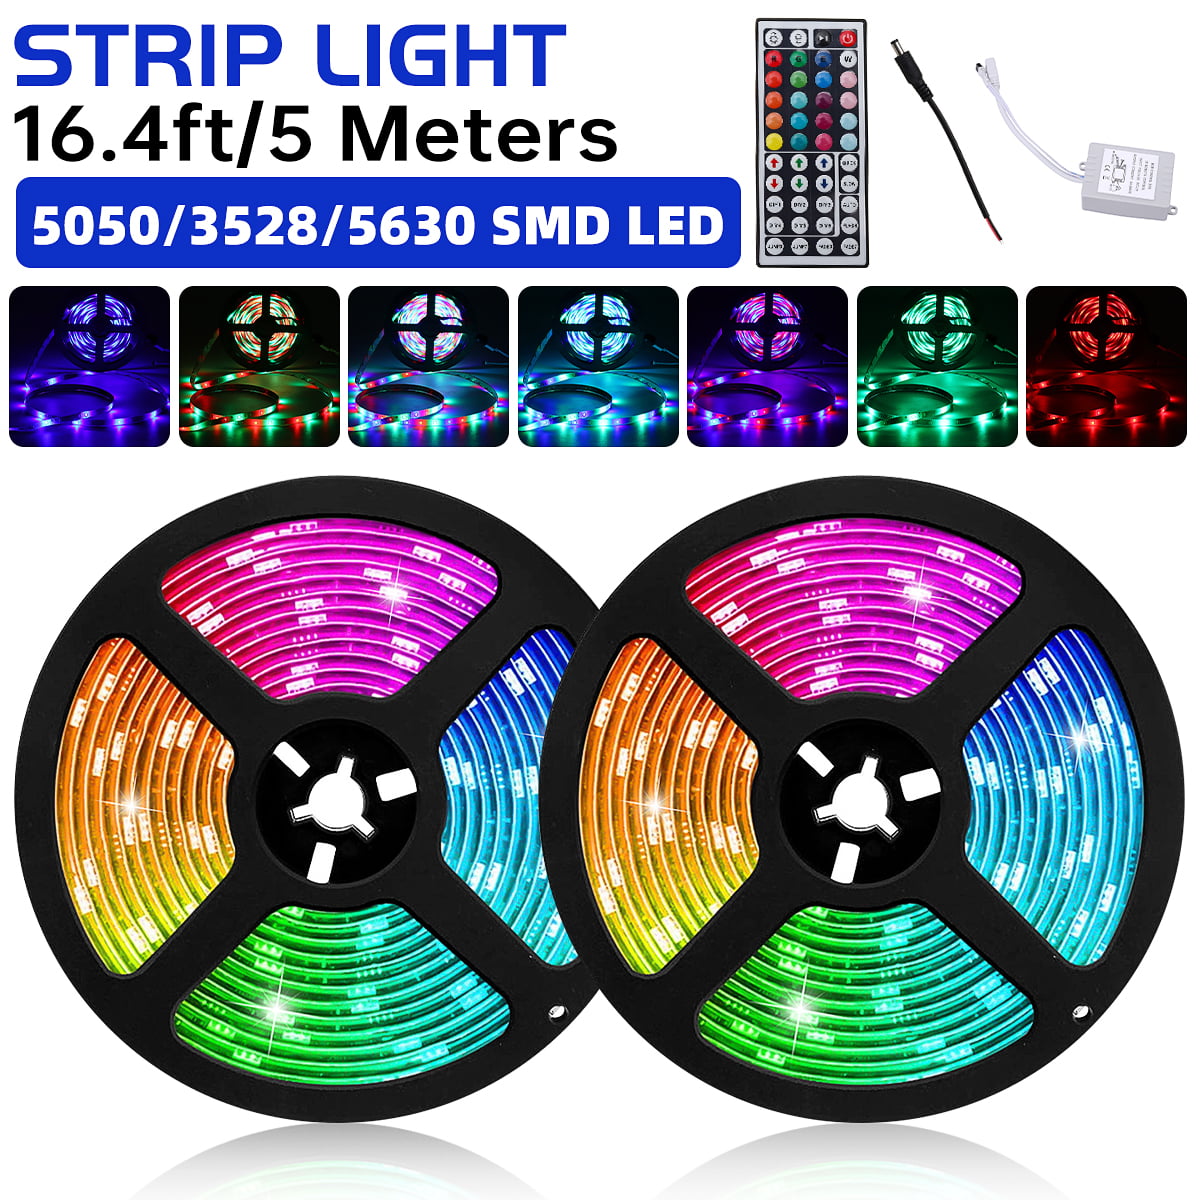 10M 5050 5630 3528 SMD RGB Flexible Strip LED Light Waterproof 12V 600 led Lamp 